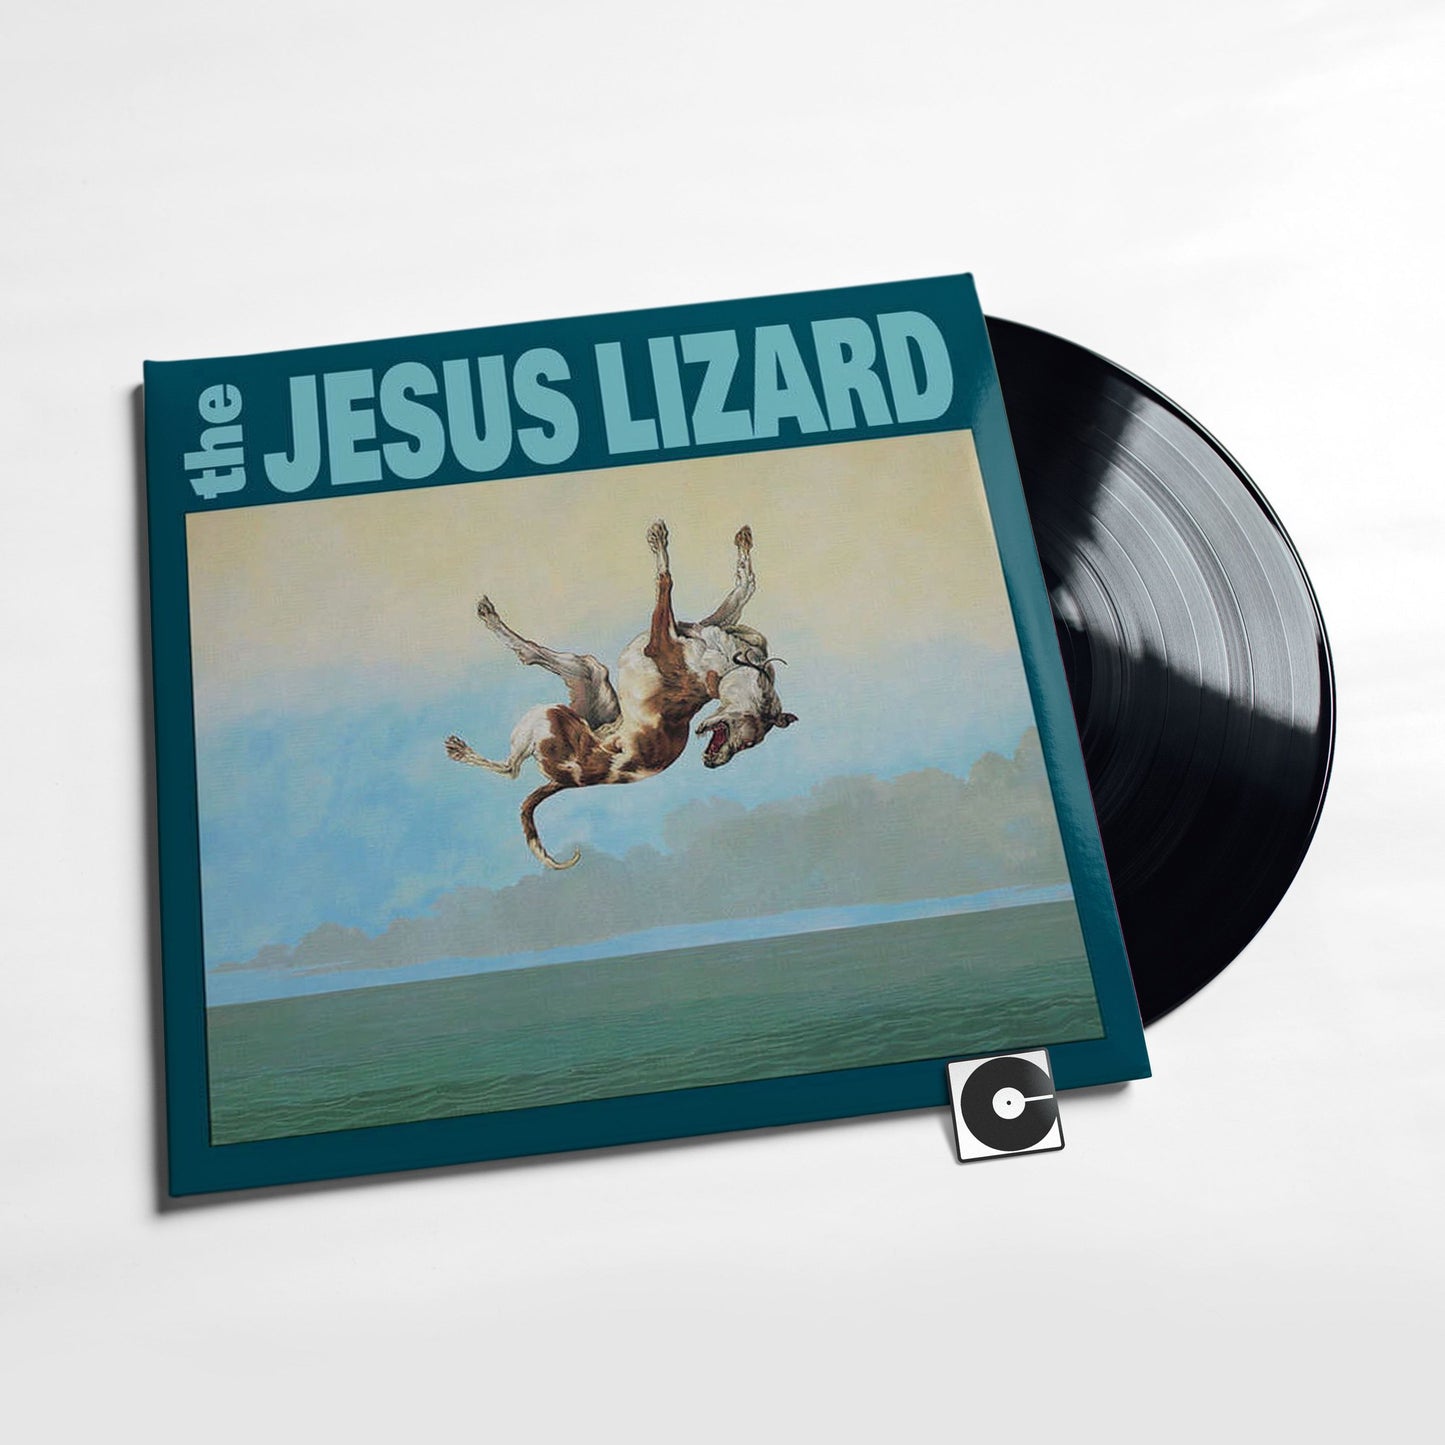 The Jesus Lizard - "Down"